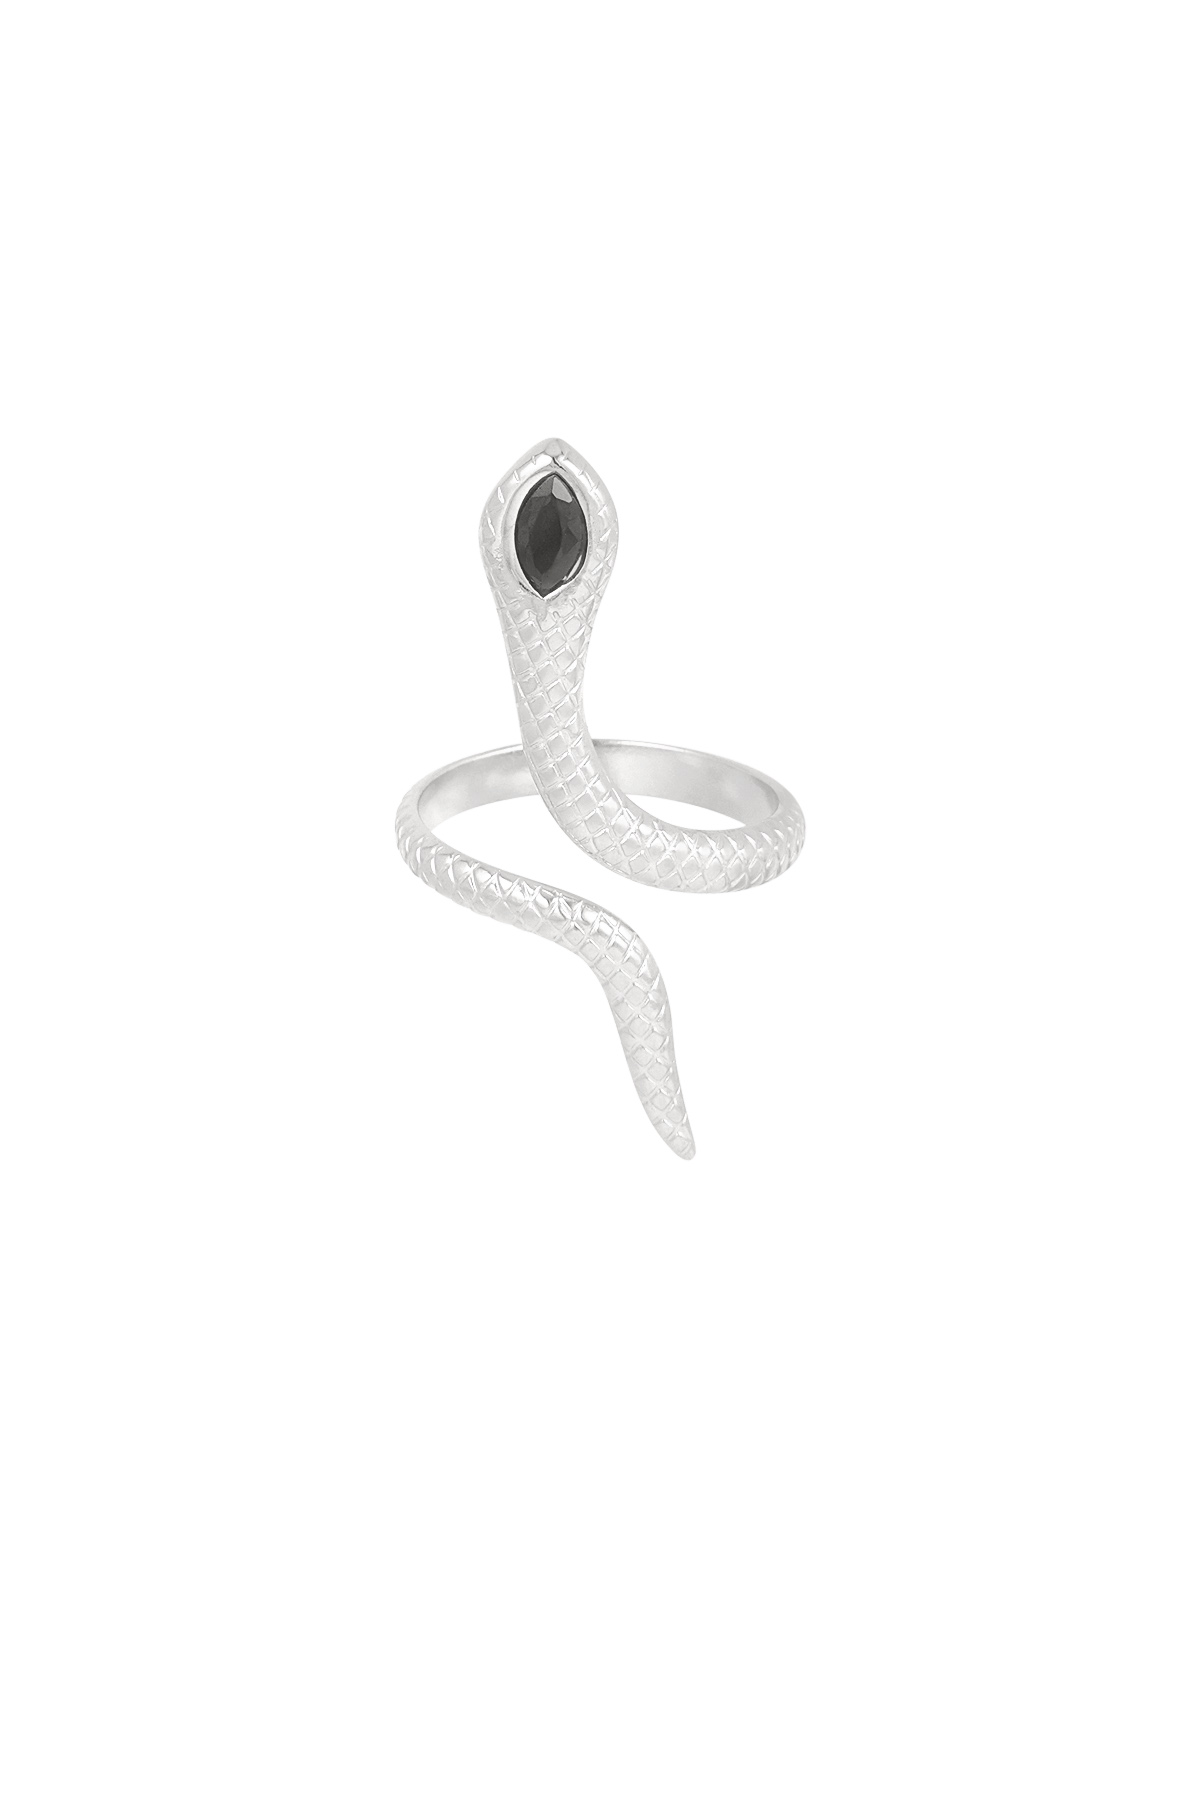 Zwarte slang ring - zilver  h5 